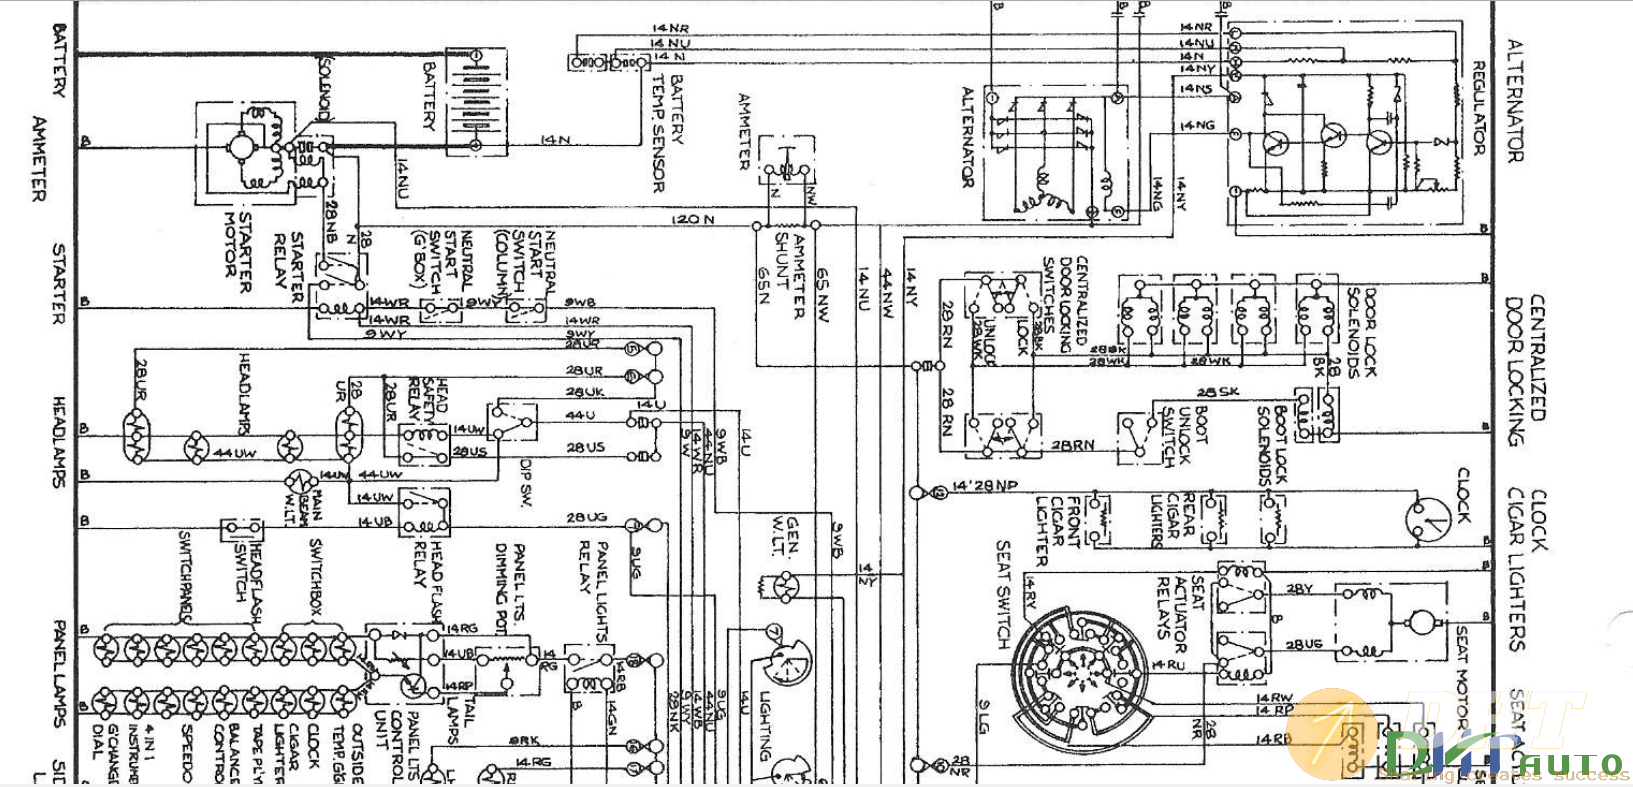 [Wiring Diagram] - Rolls Royce Wiring Diagrams | Automotive & Heavy